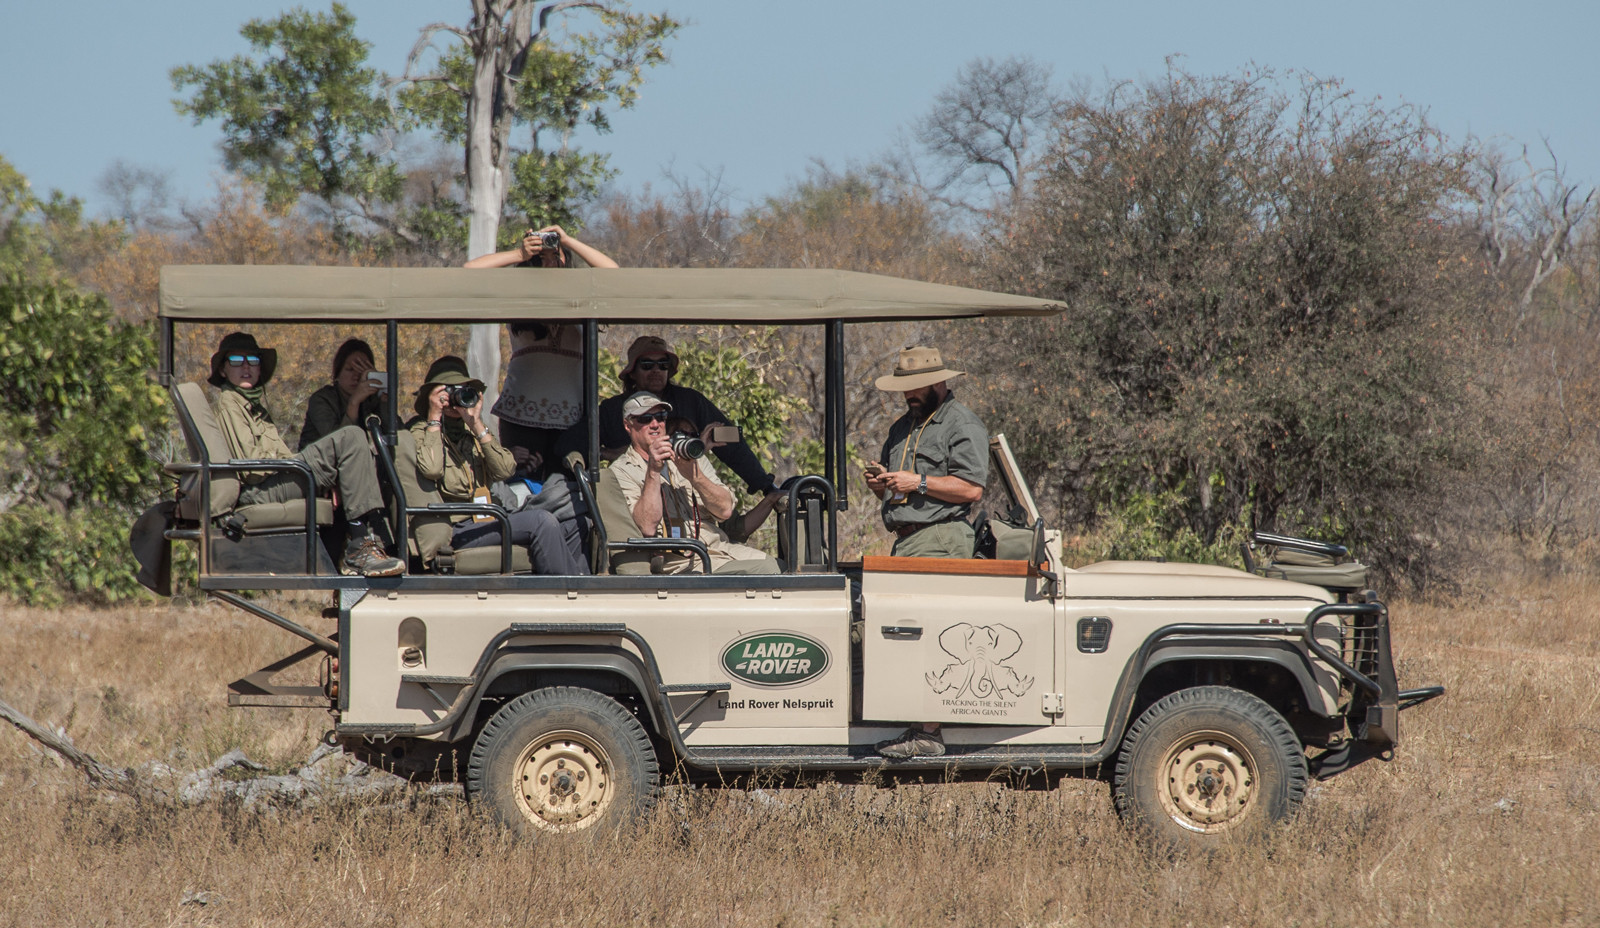 Animal spotting from a safari vehicle